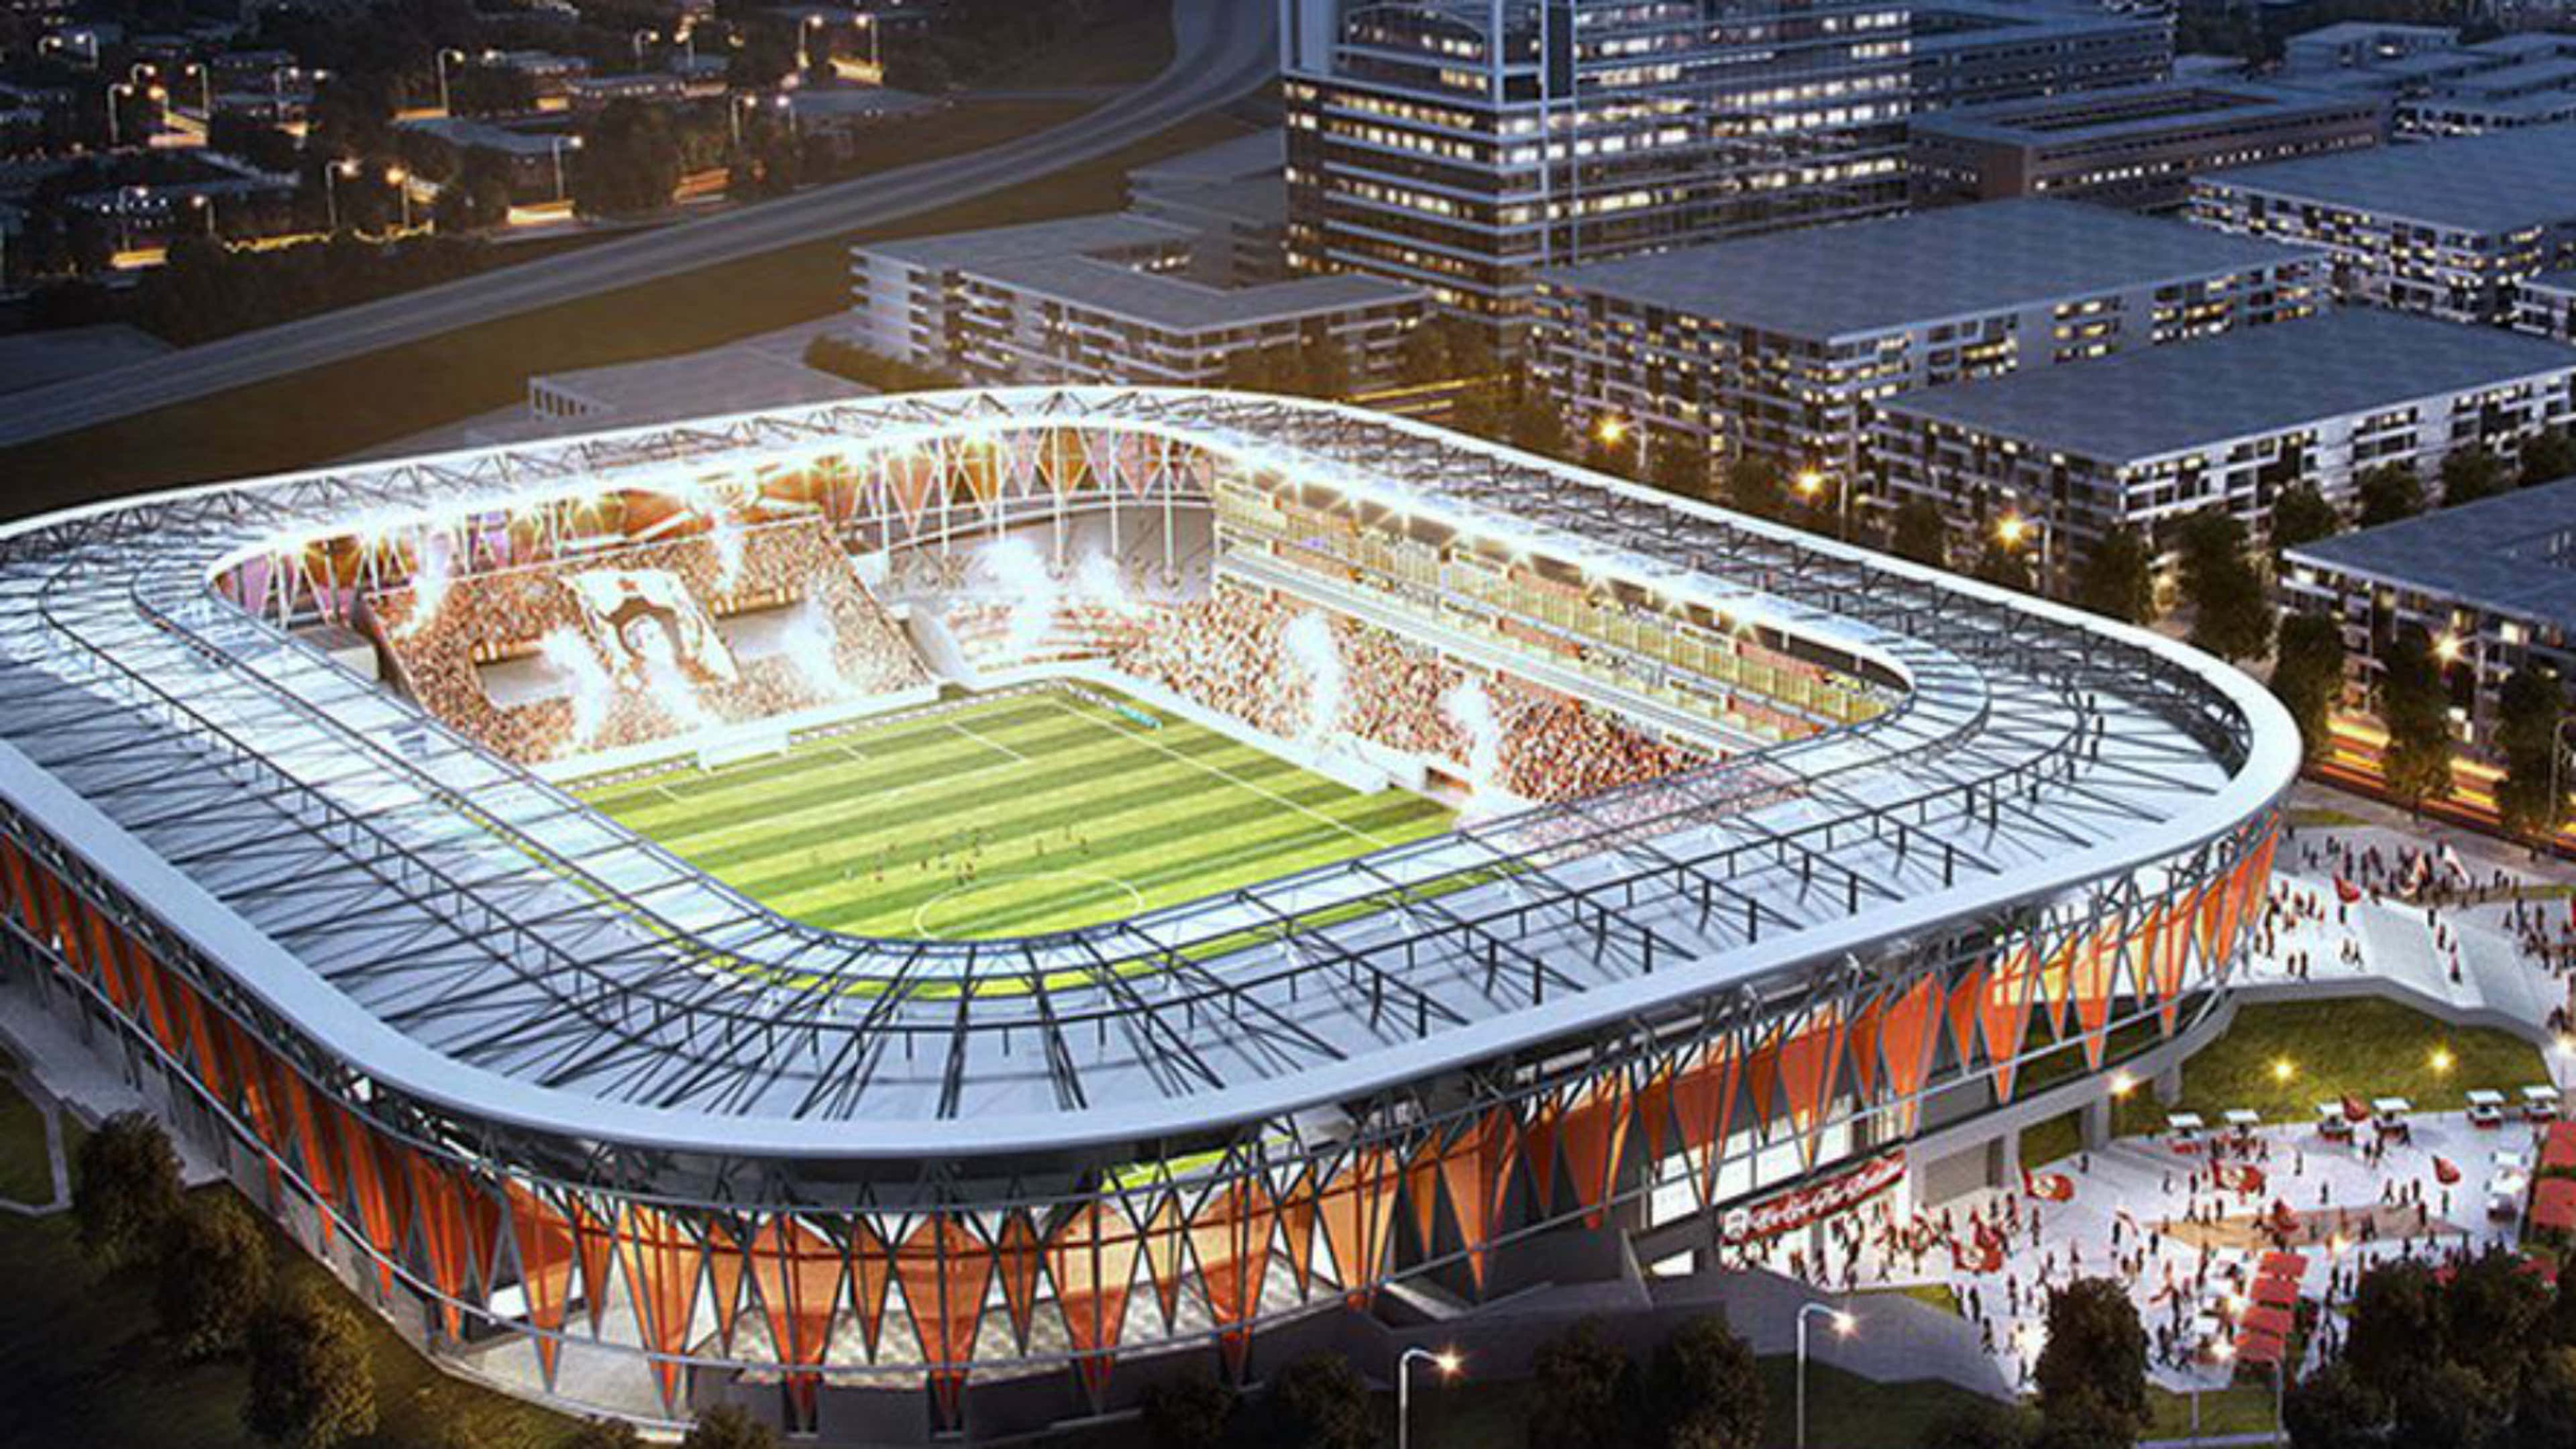 New St. Louis City SC stadium renderings reveal seat designs